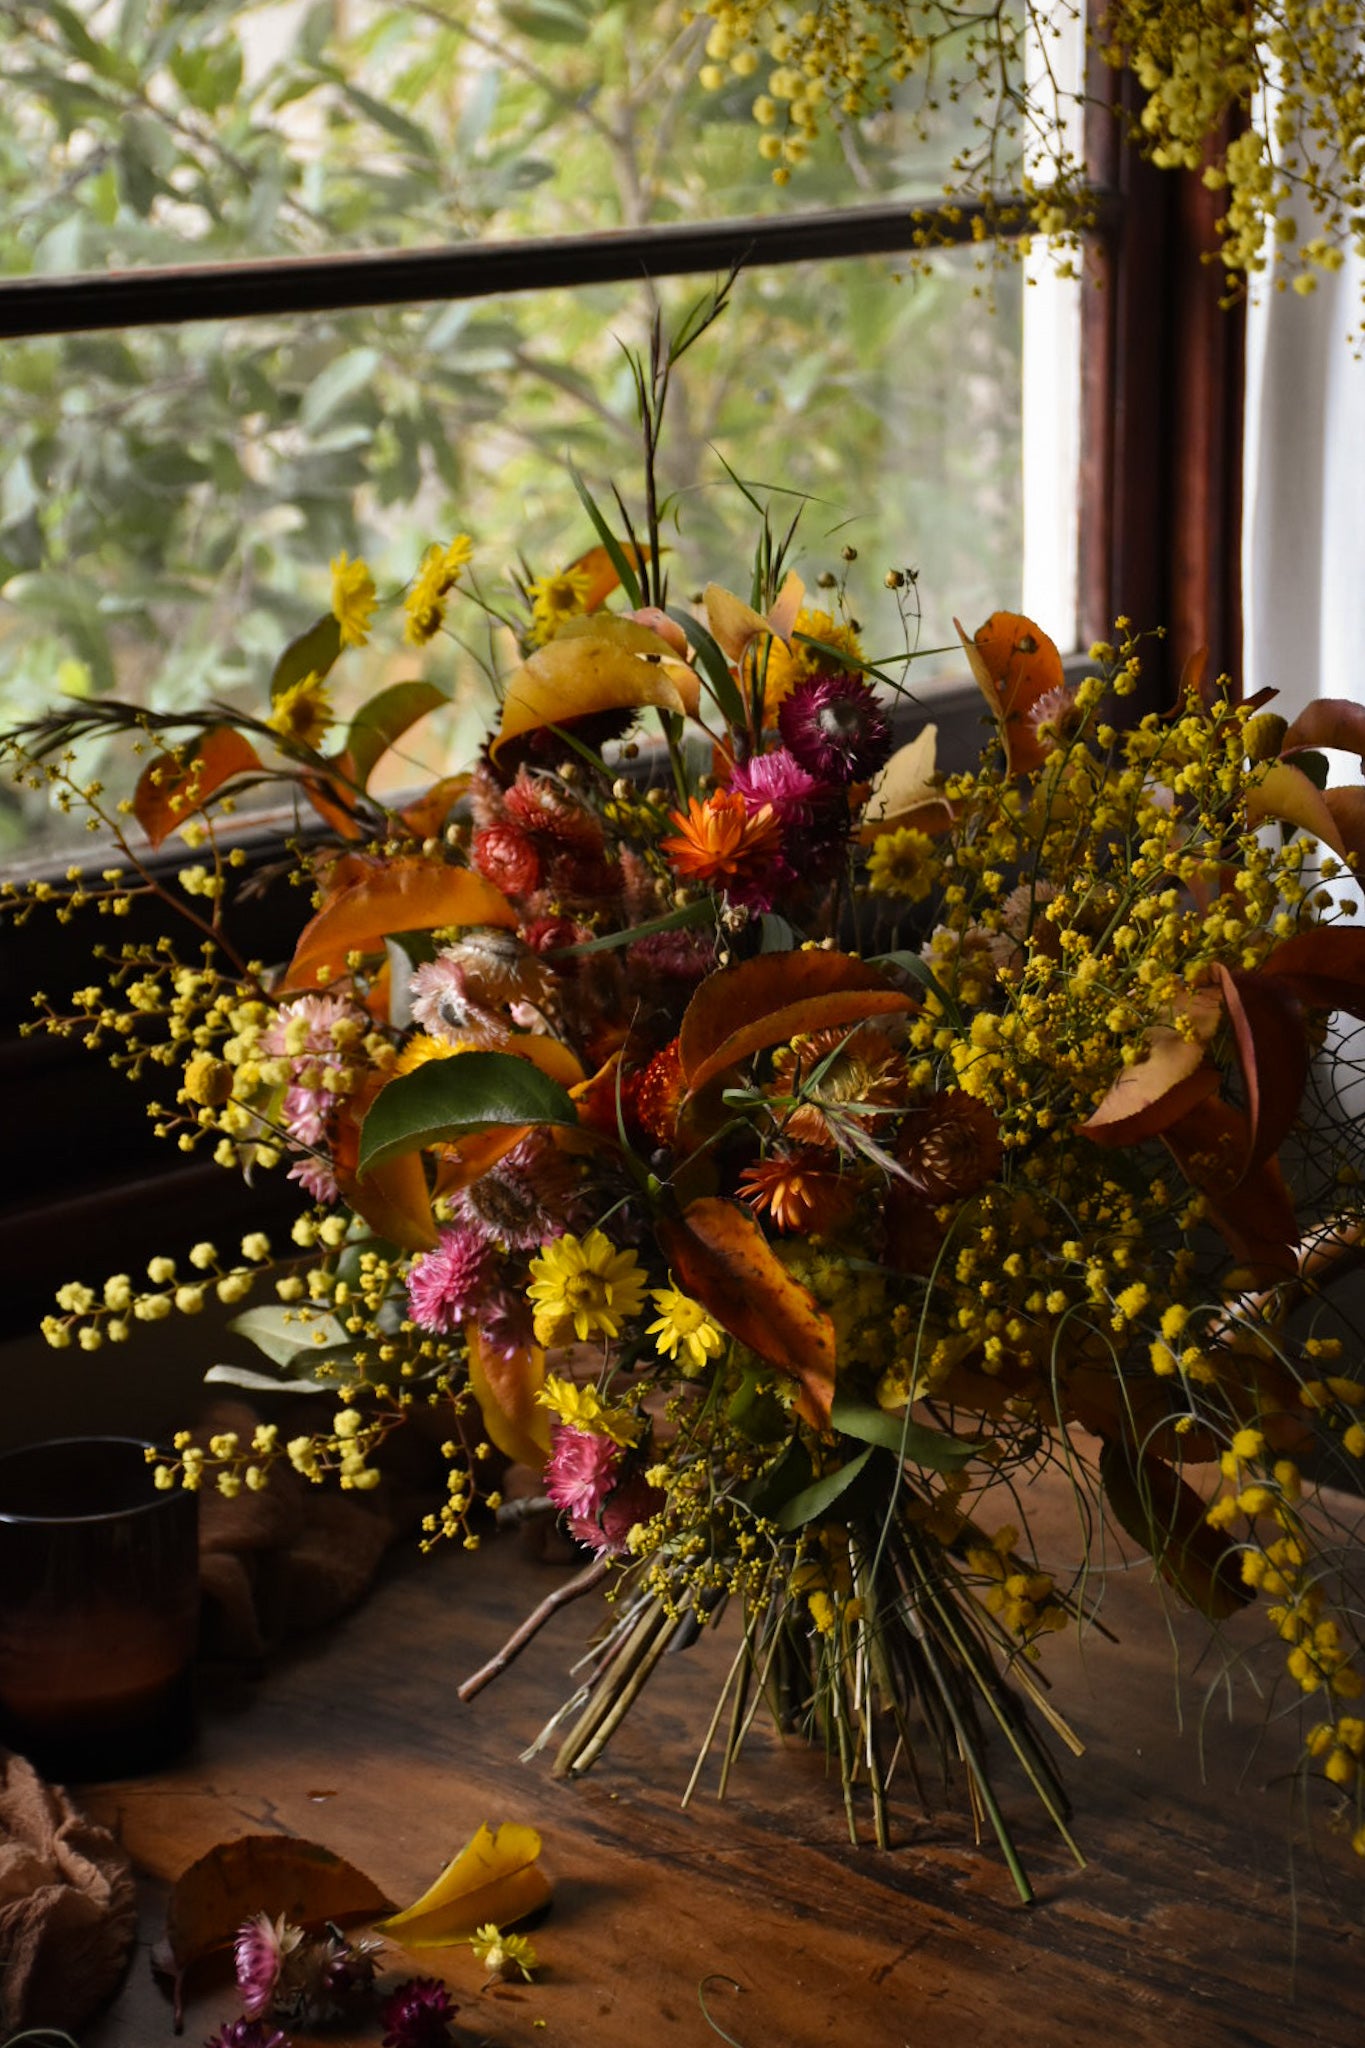 amble and twine dried flowers australia wattle season how to dry and create with australian acacias